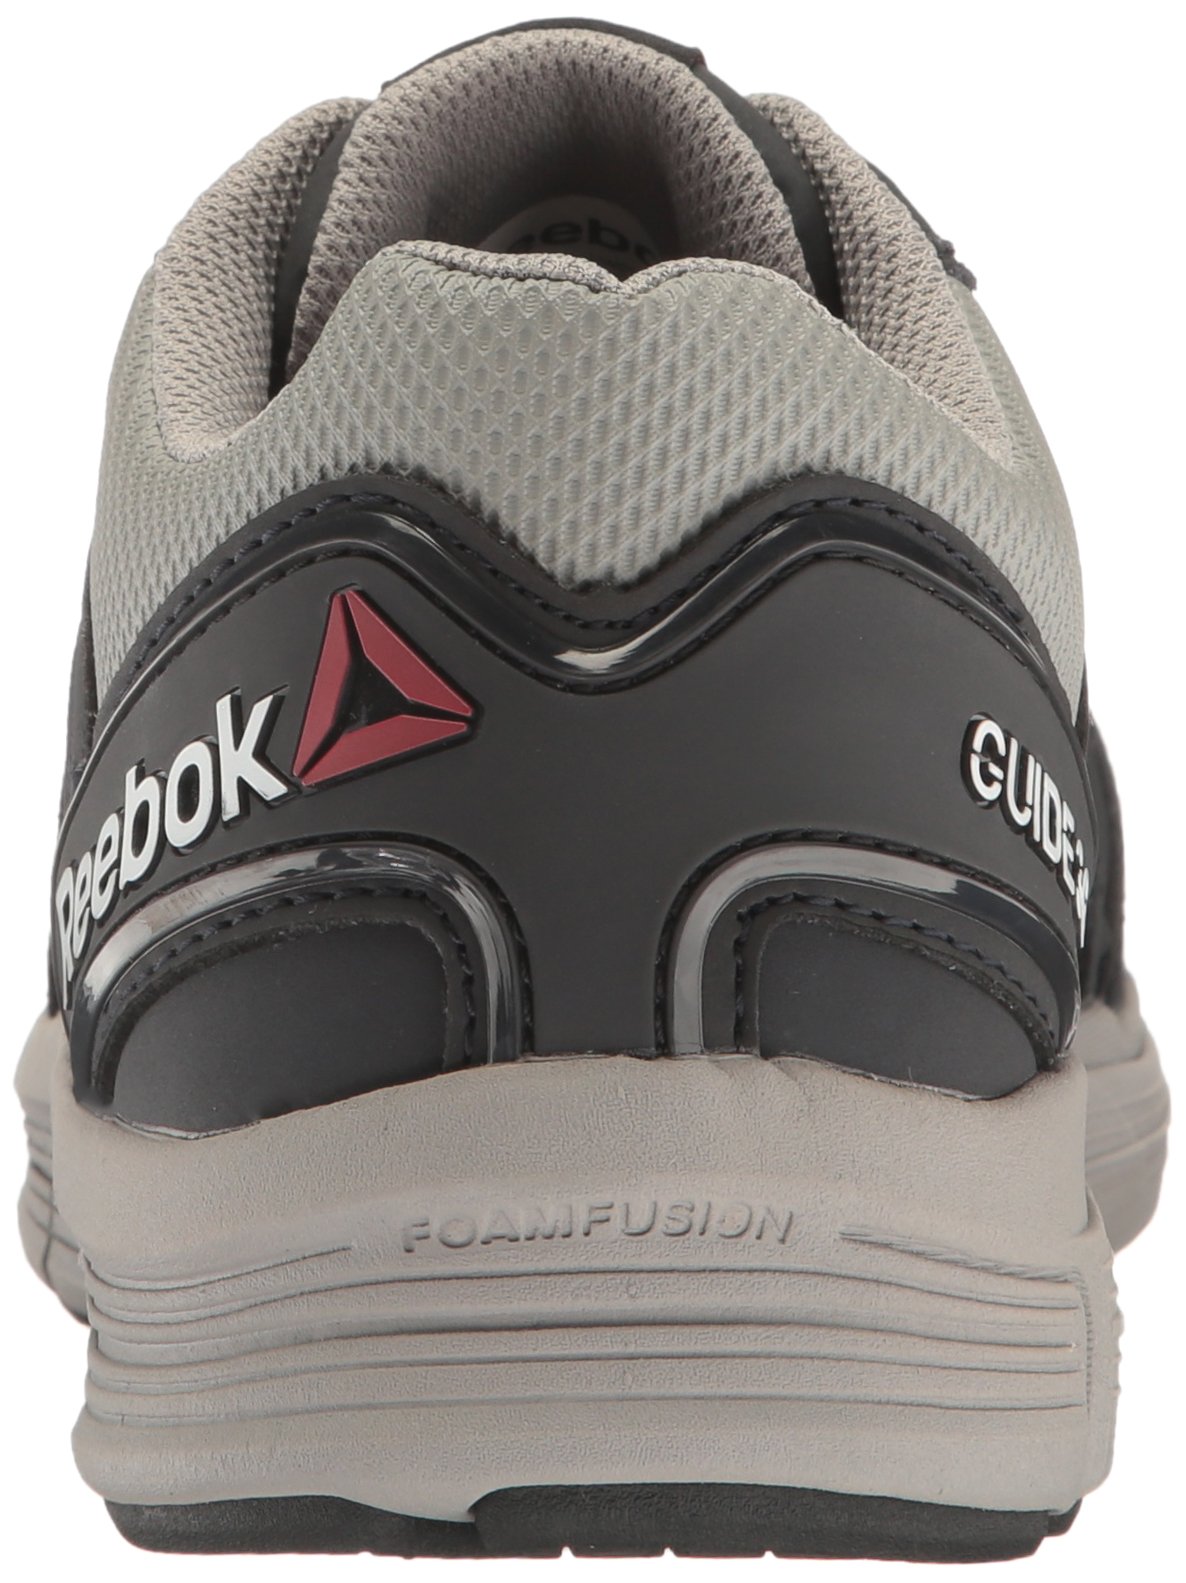 Reebok Men's Guide Work Safety Toe Industrial & Construction Shoe